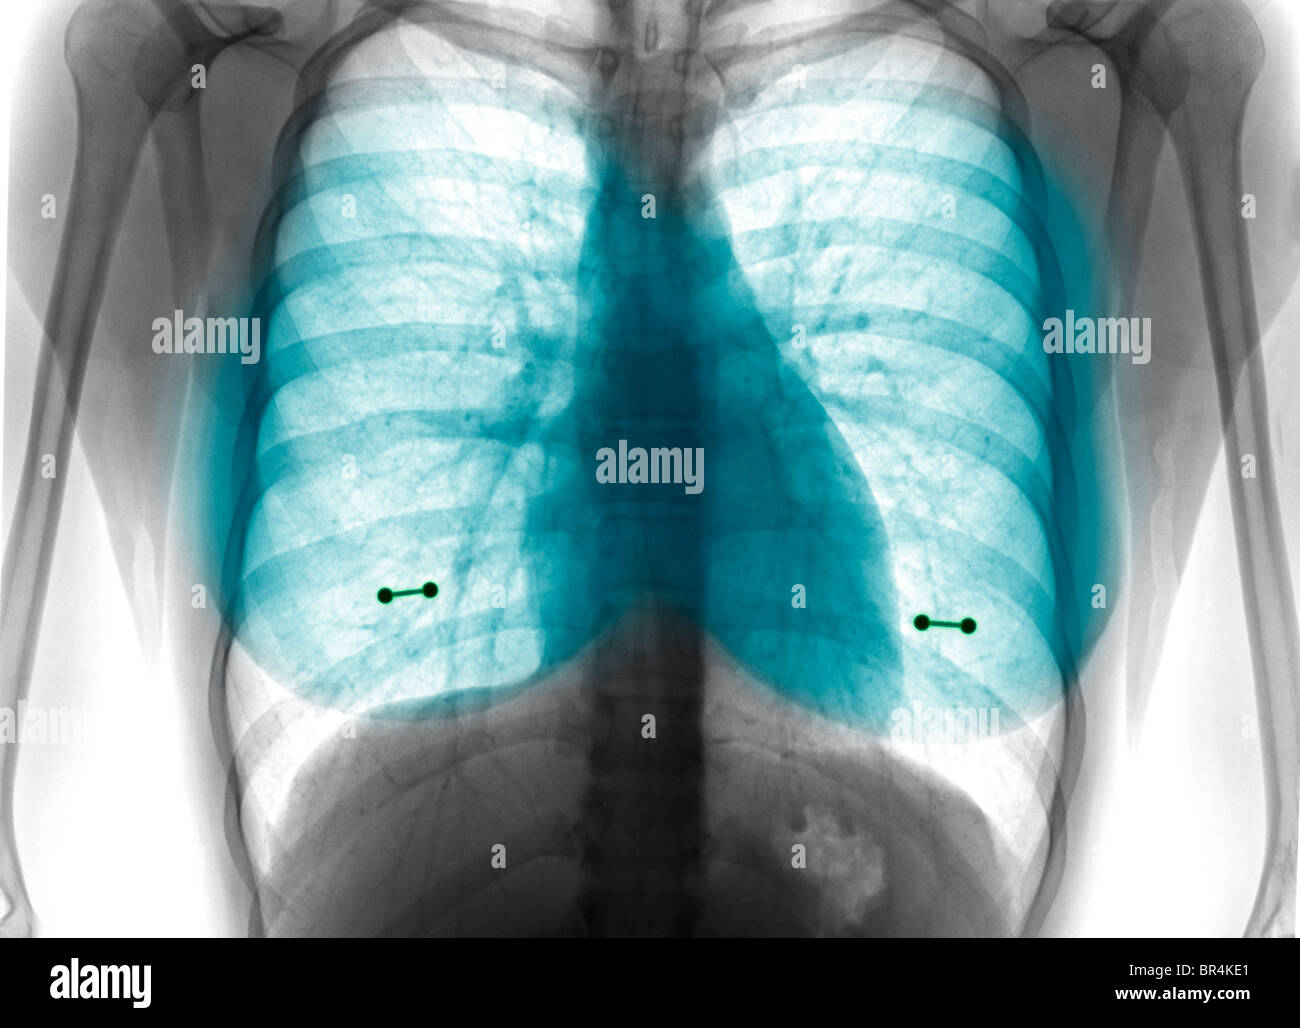 x-ray zeigt Brustwarzenpiercings bei einer jungen Frau, Brust Röntgen zeigt Brustwarzenpiercings Stockfoto